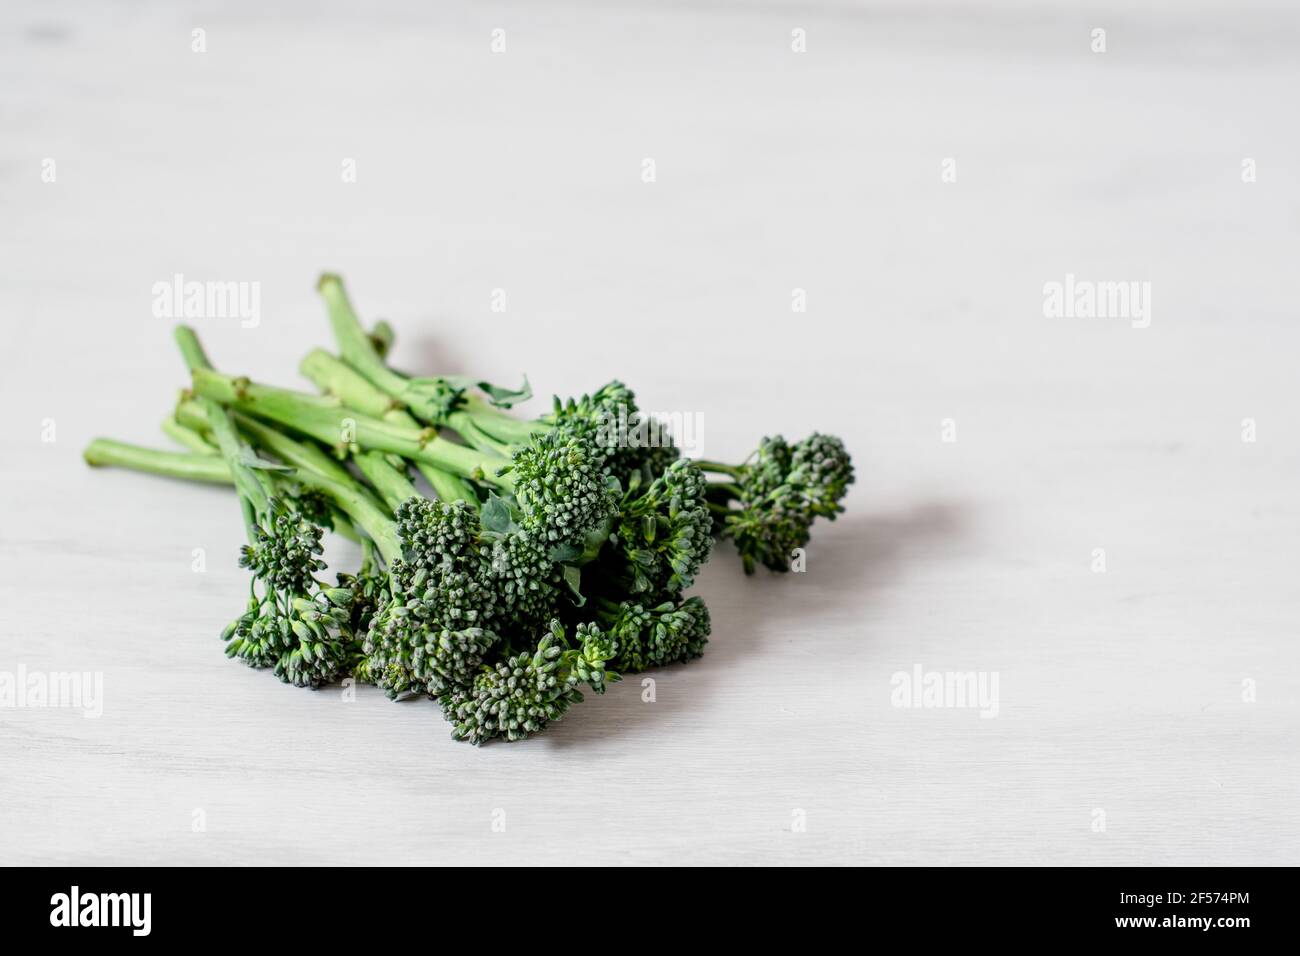 Spring Vegetable - Spears of Organic Tenderstem Broccoli against a plain neutral background Stock Photo